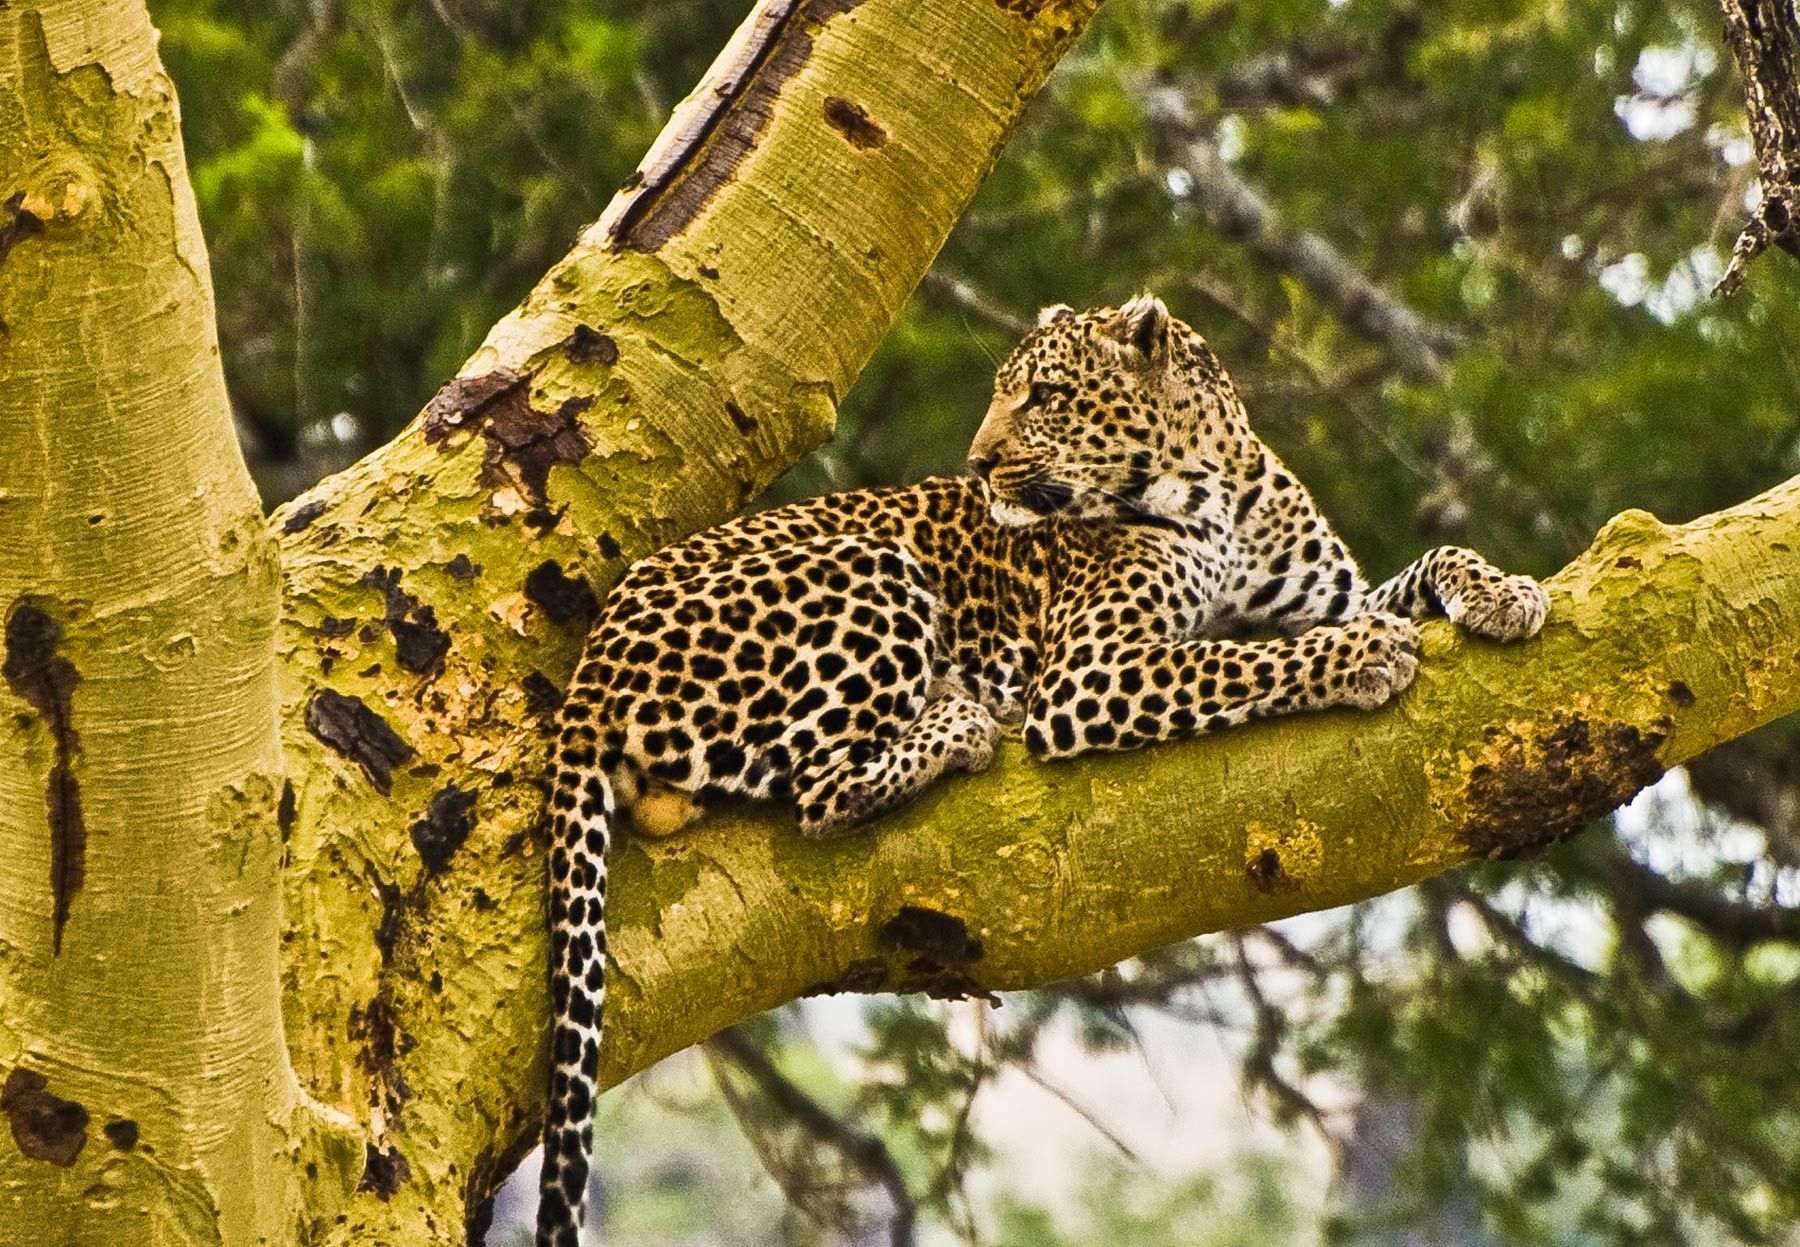 Leopard in Tree, Serengeti National Park, Tanzania